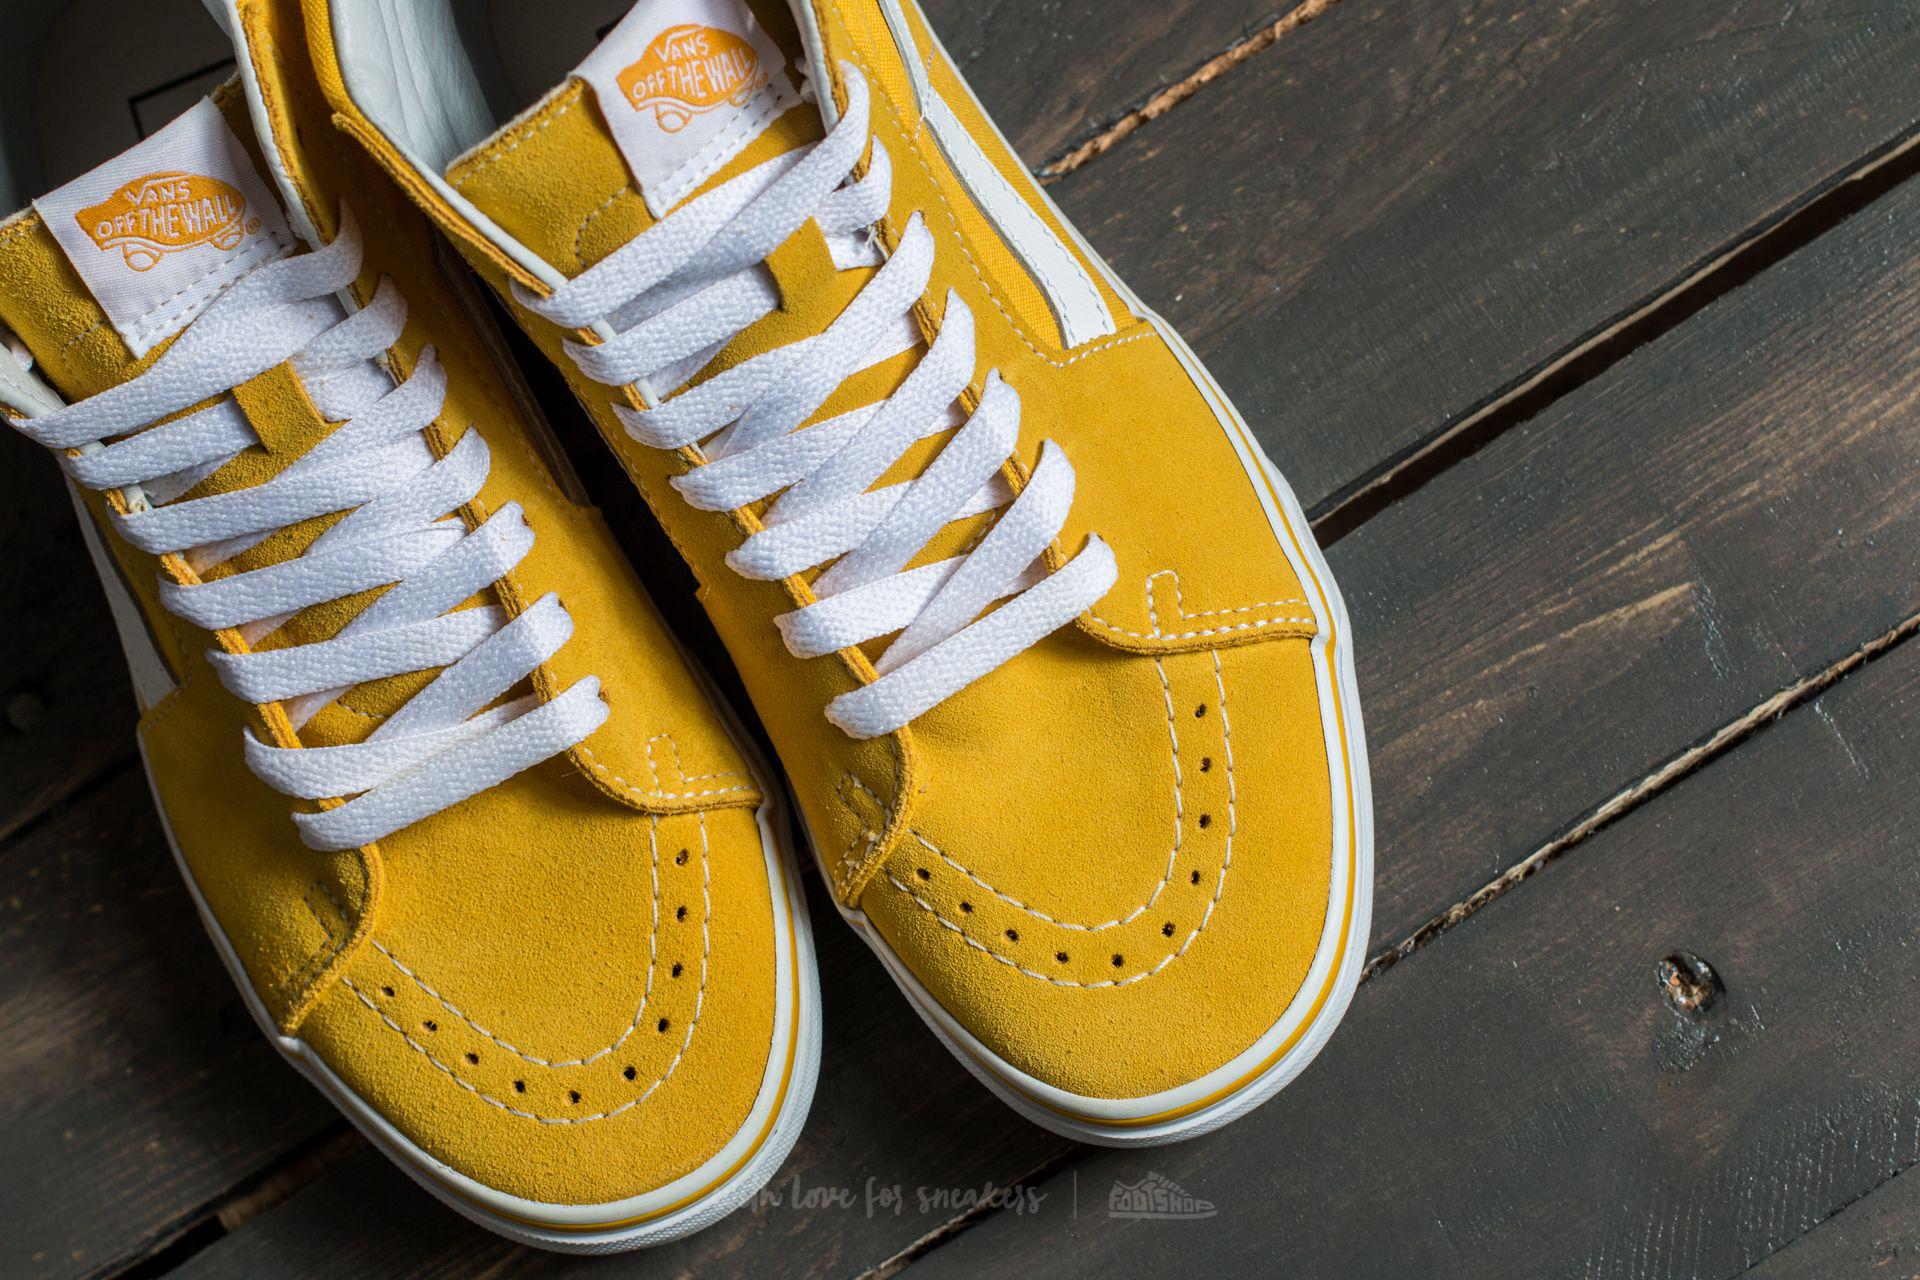 vans sk8 hi spectra yellow & white skate shoes